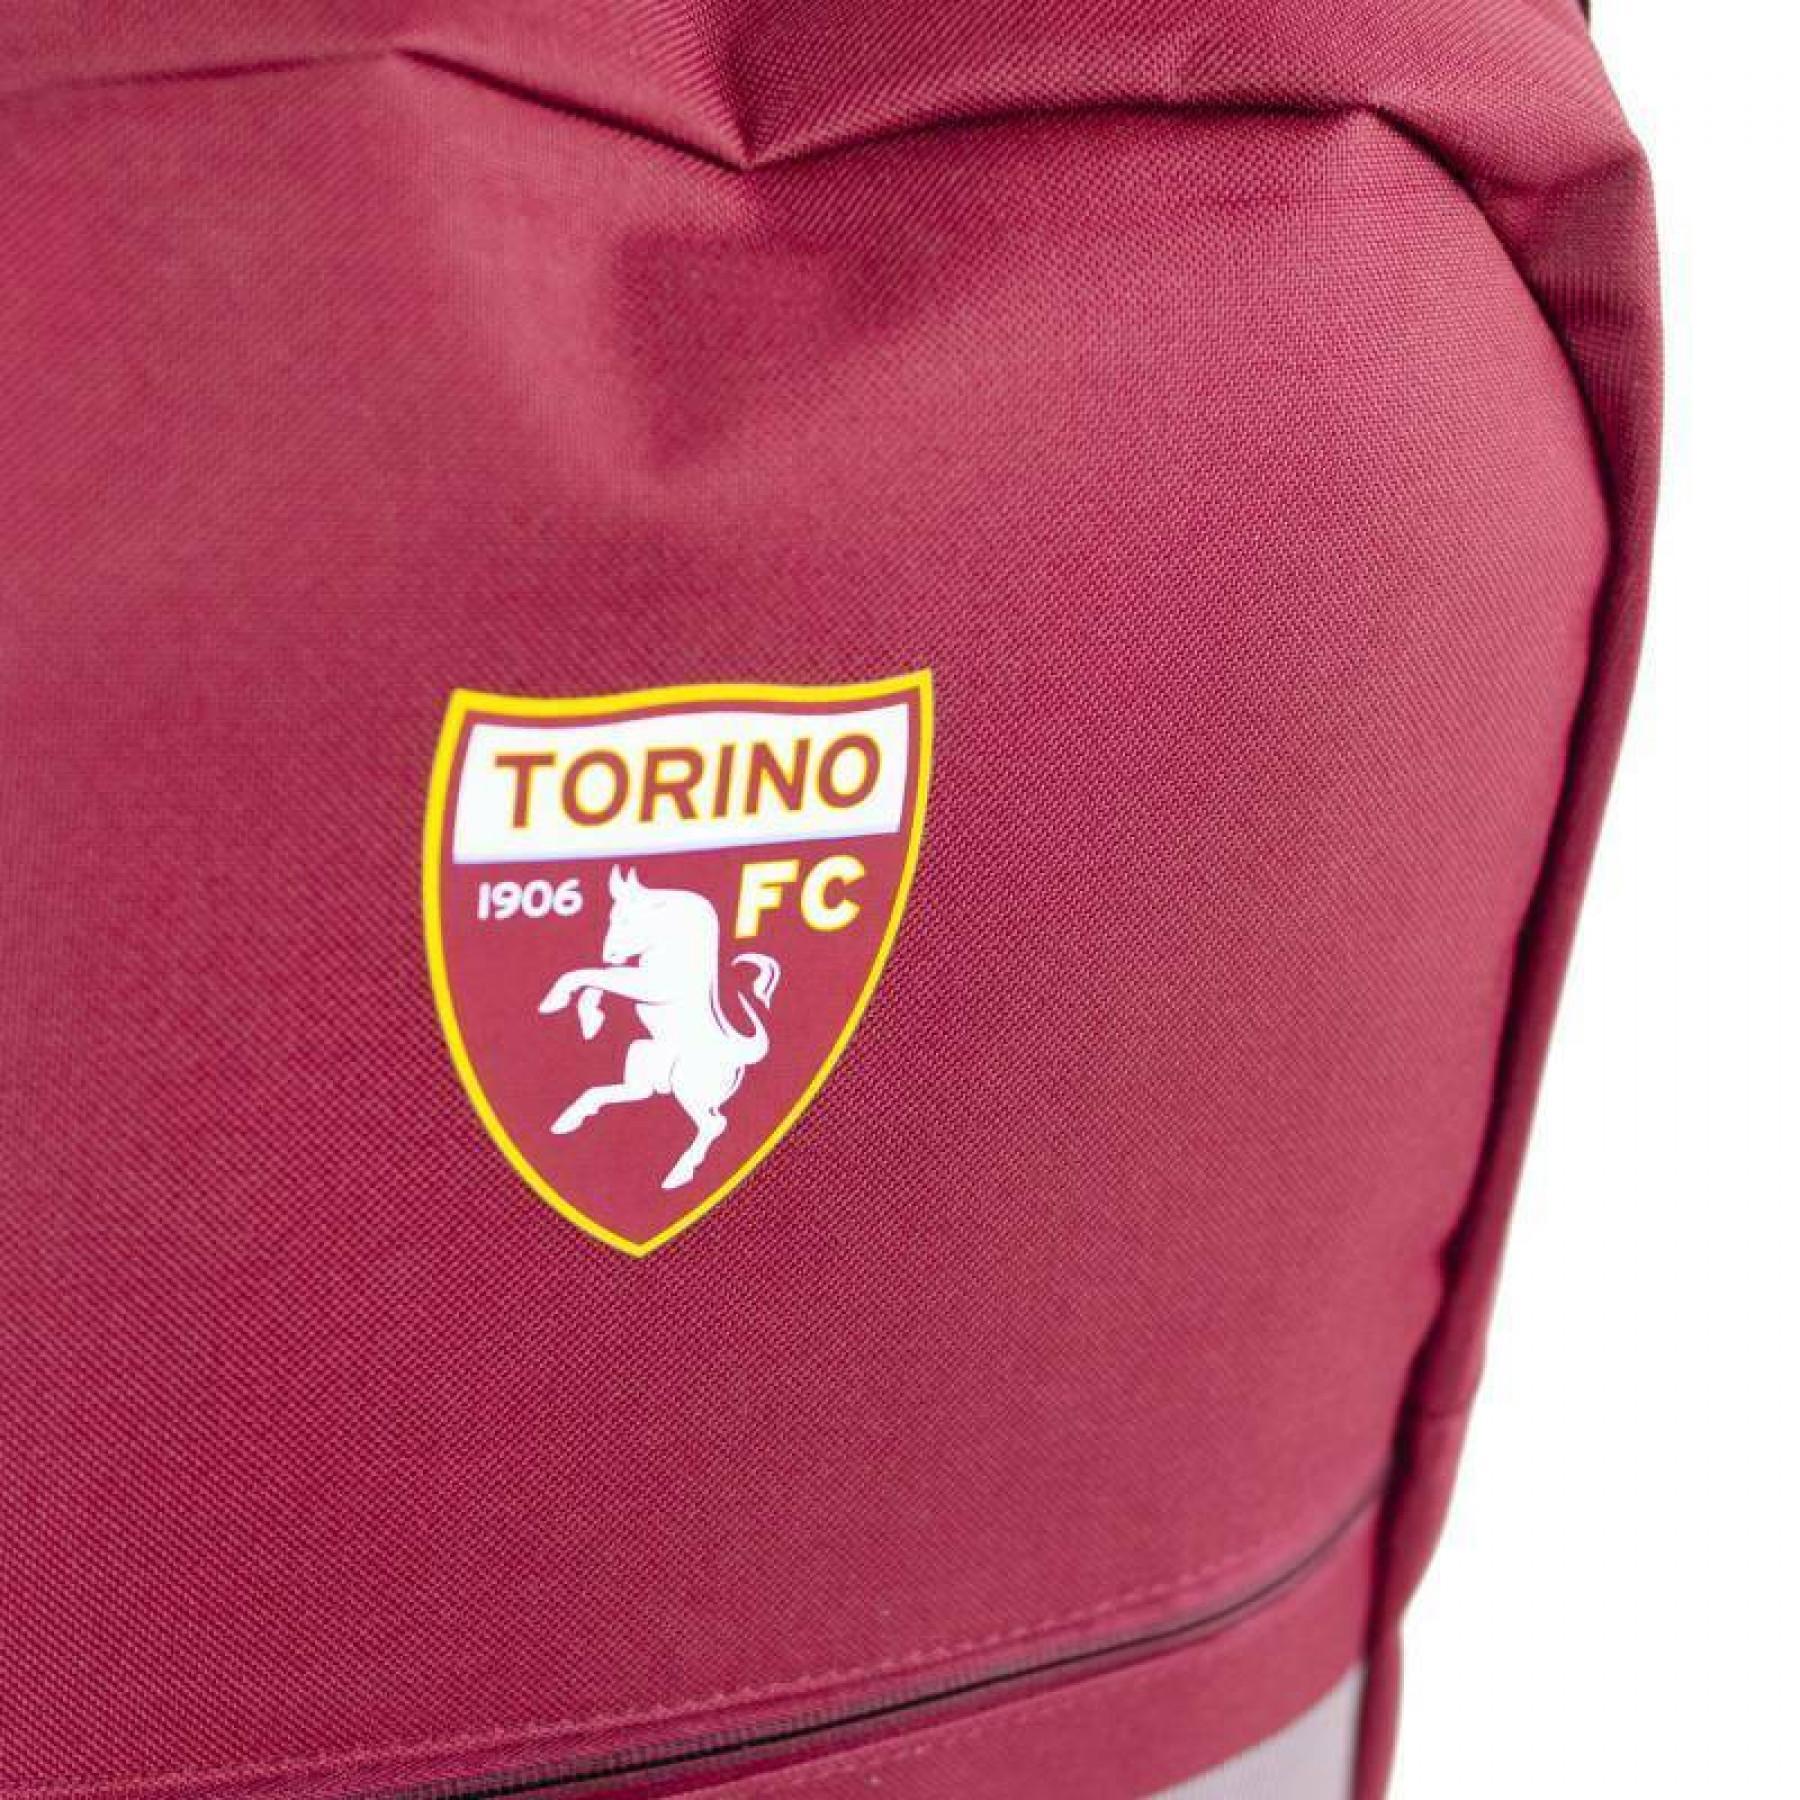 Plecak Torino 2019/20